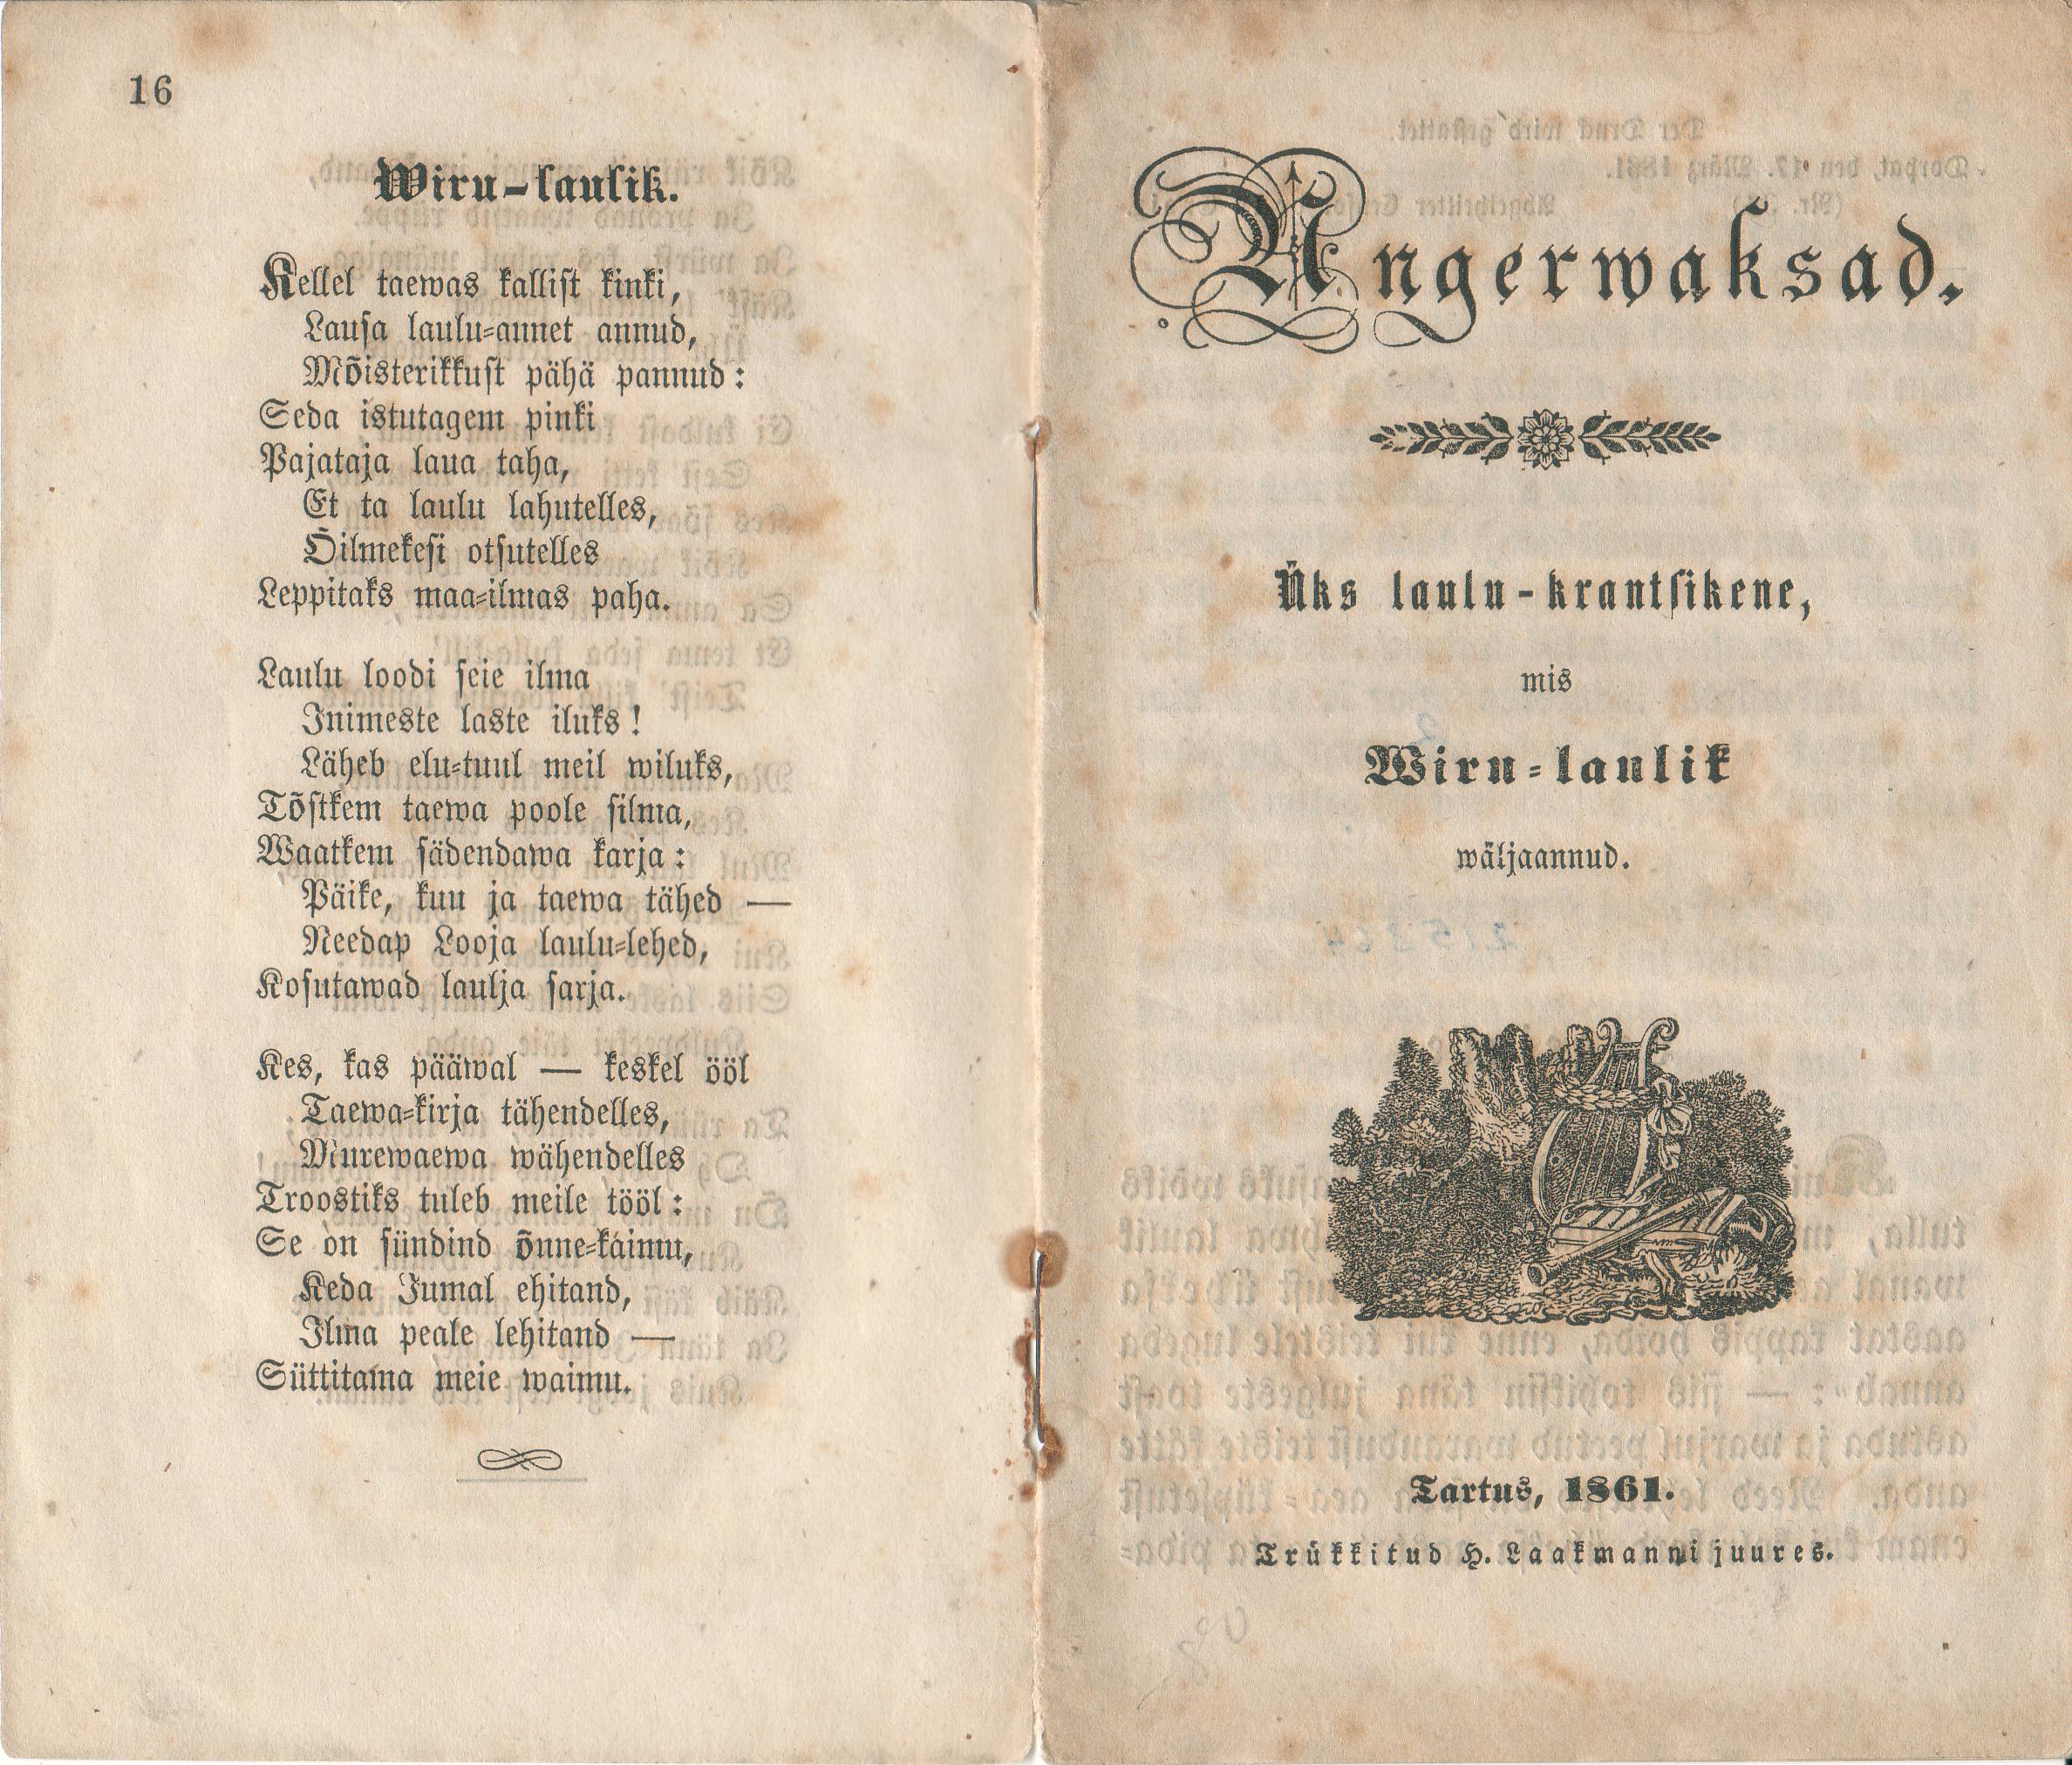 Angerwaksad (1861) | 1. (16) Title page